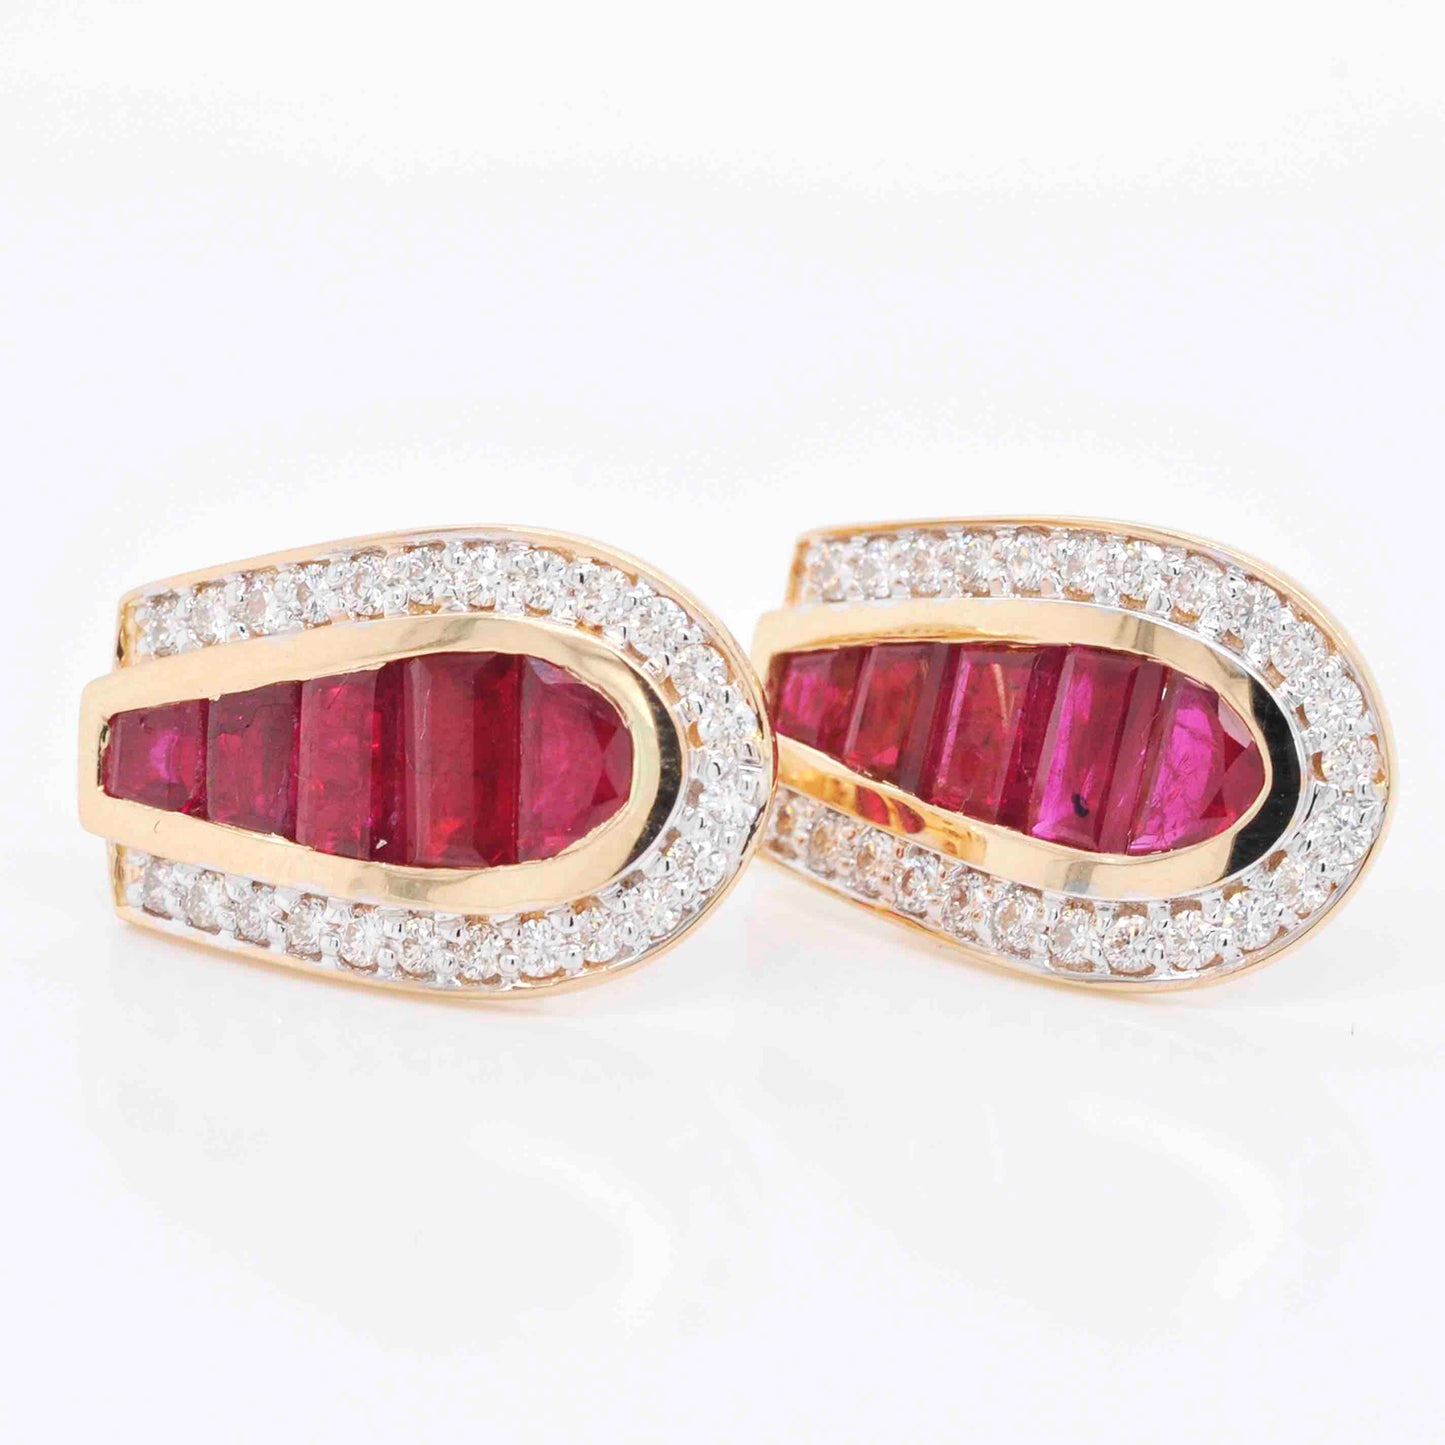 Natural ruby diamond jewelry